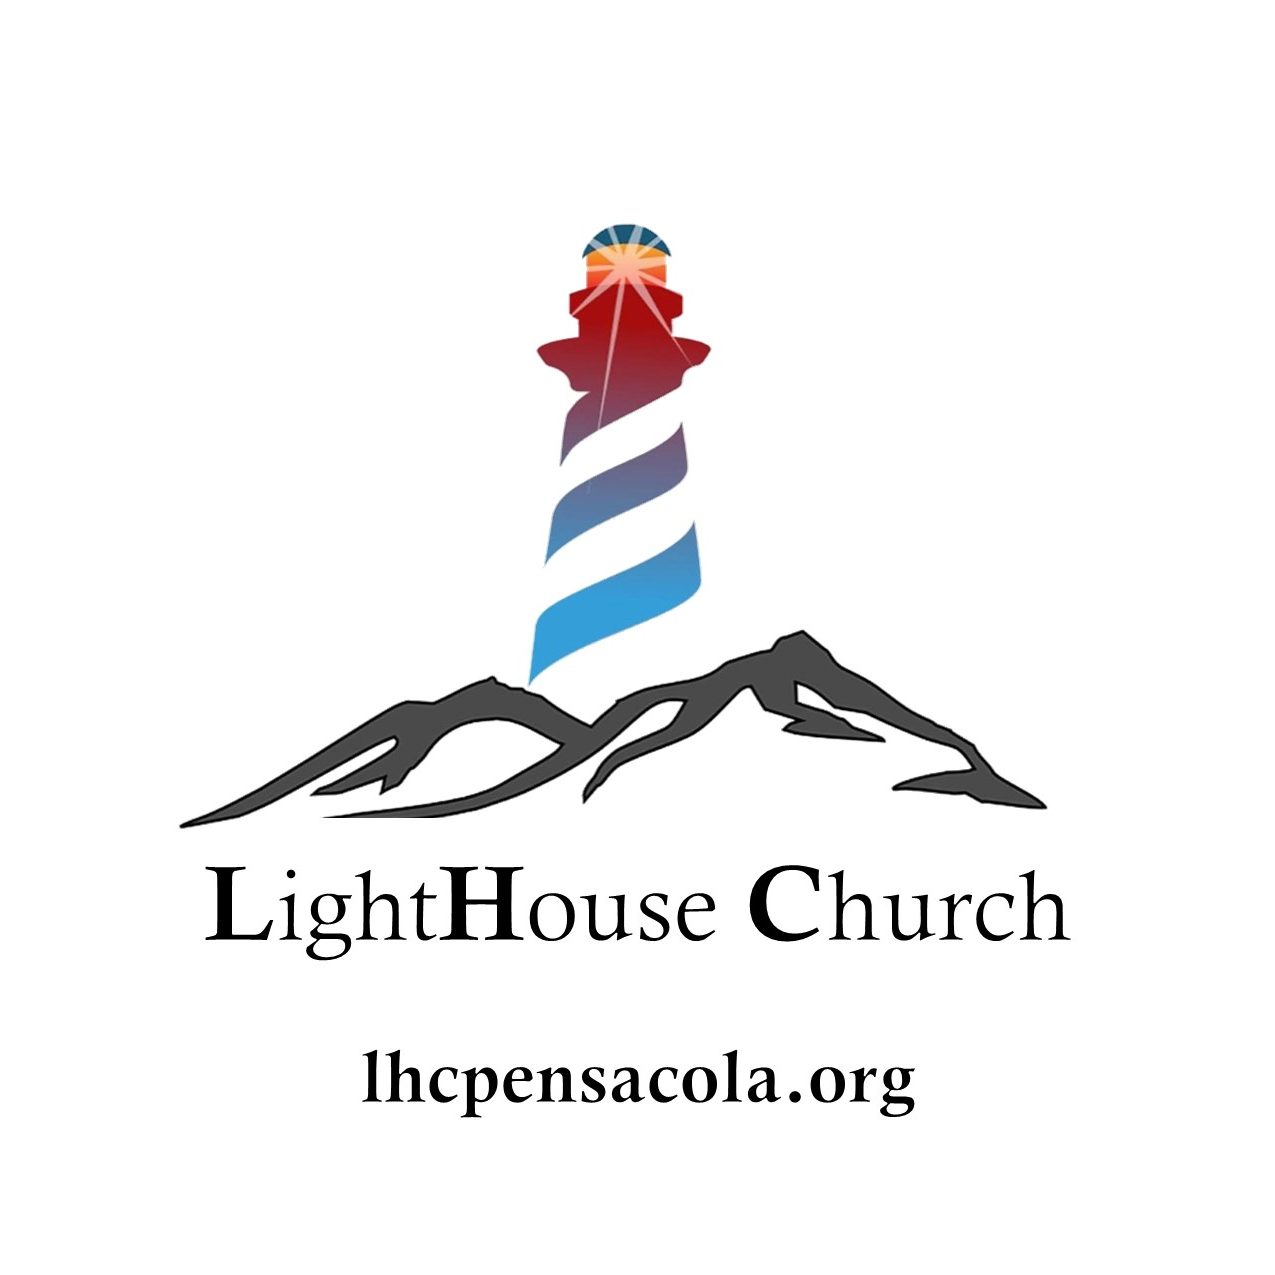 New Church Logo